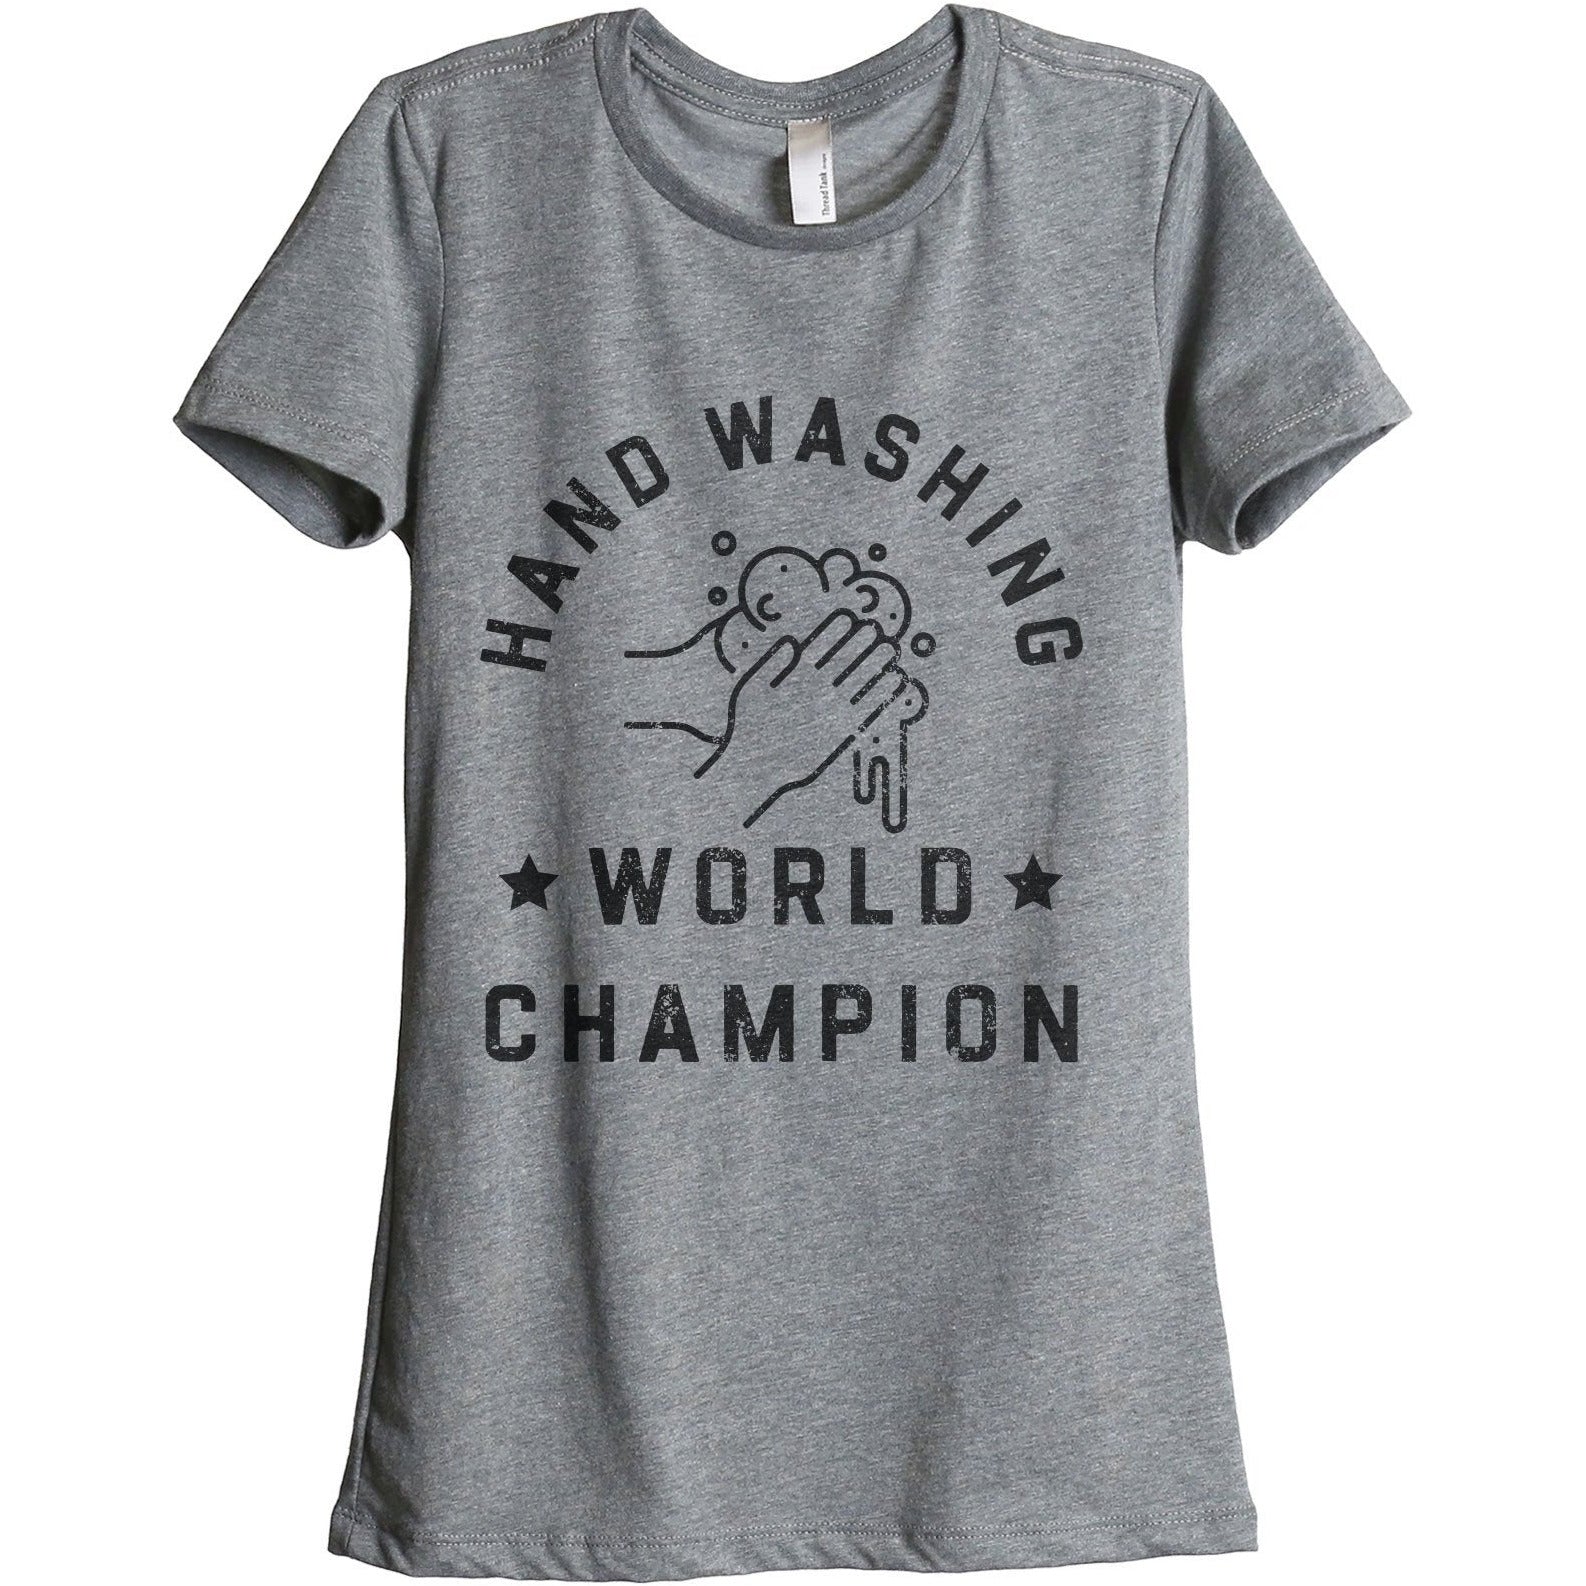 Hand Washing World Champion Women's Relaxed Crewneck T-Shirt Top Tee Heather Grey